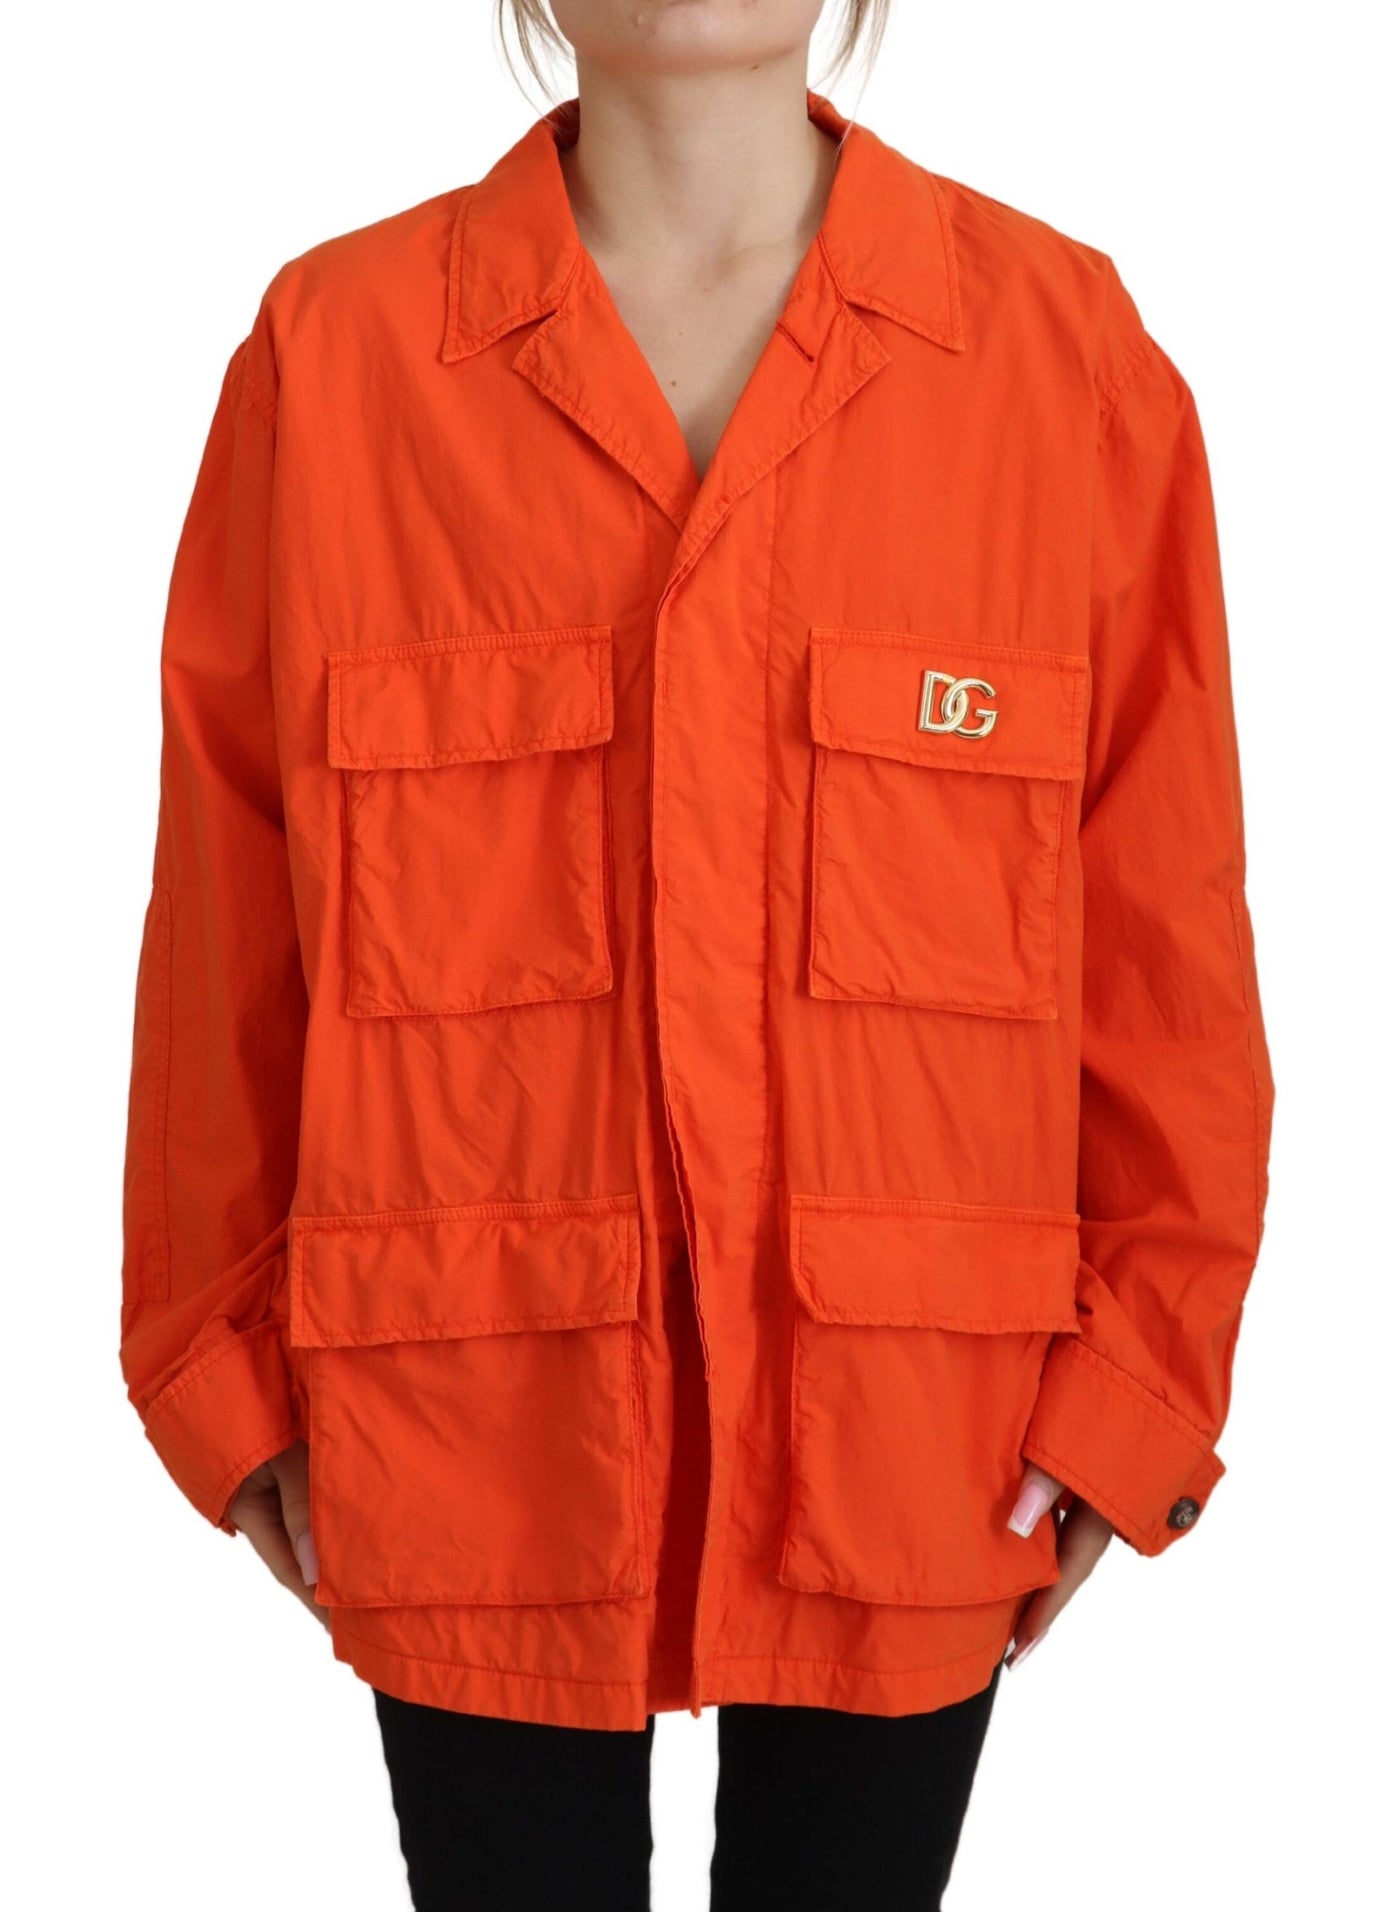 Orange Collared Windbreaker Cotton Jacket